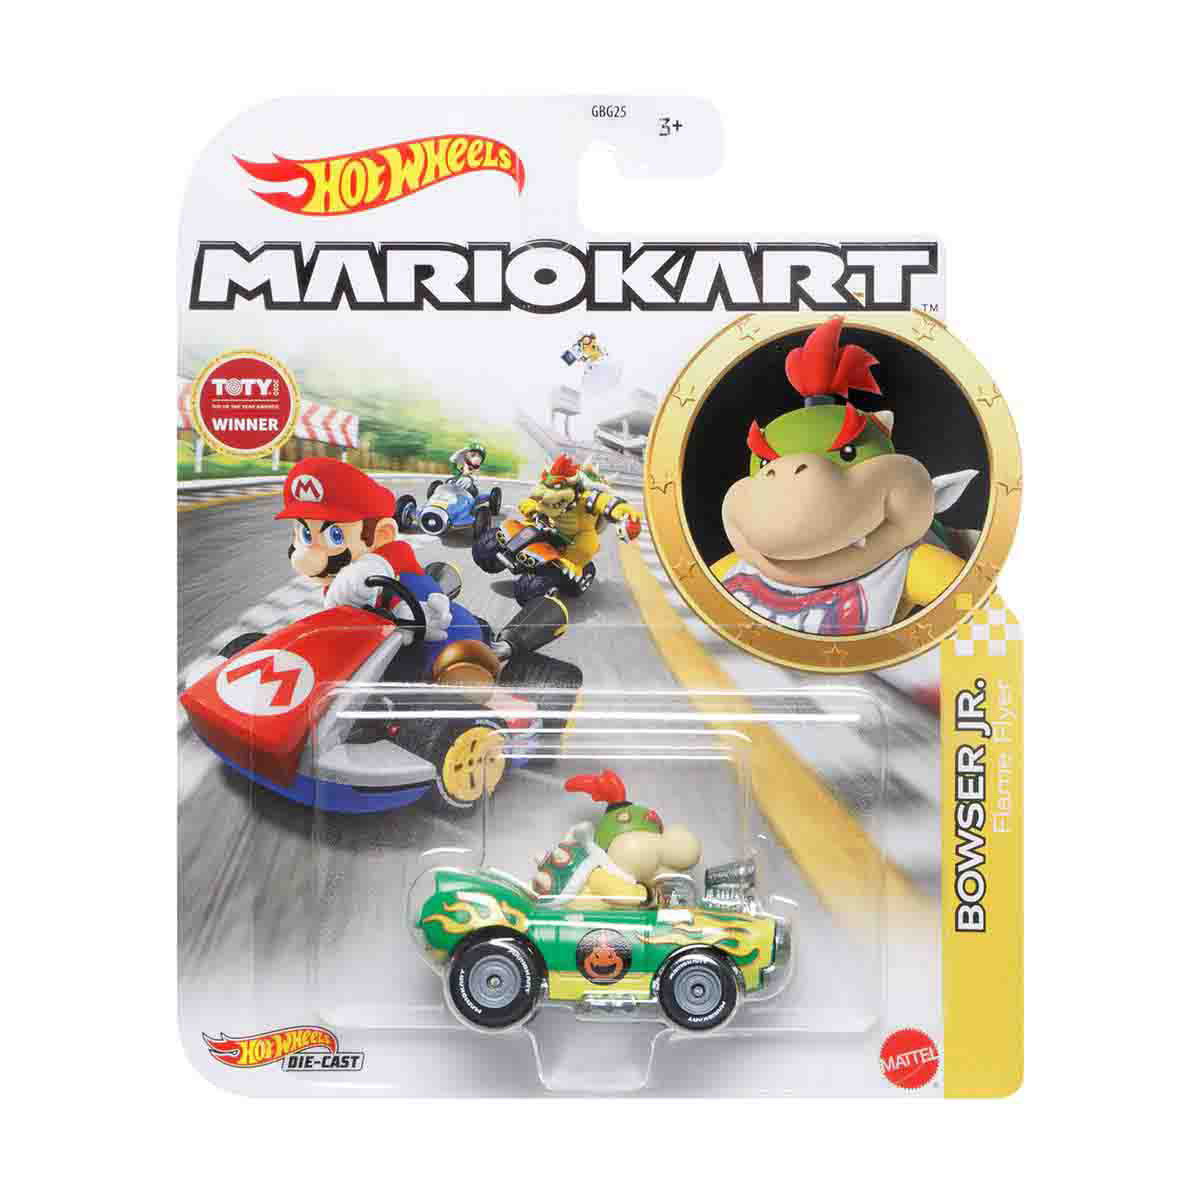 Hot Wheels Mario Kart Mario Circuit Racing Set Review from Mattel 